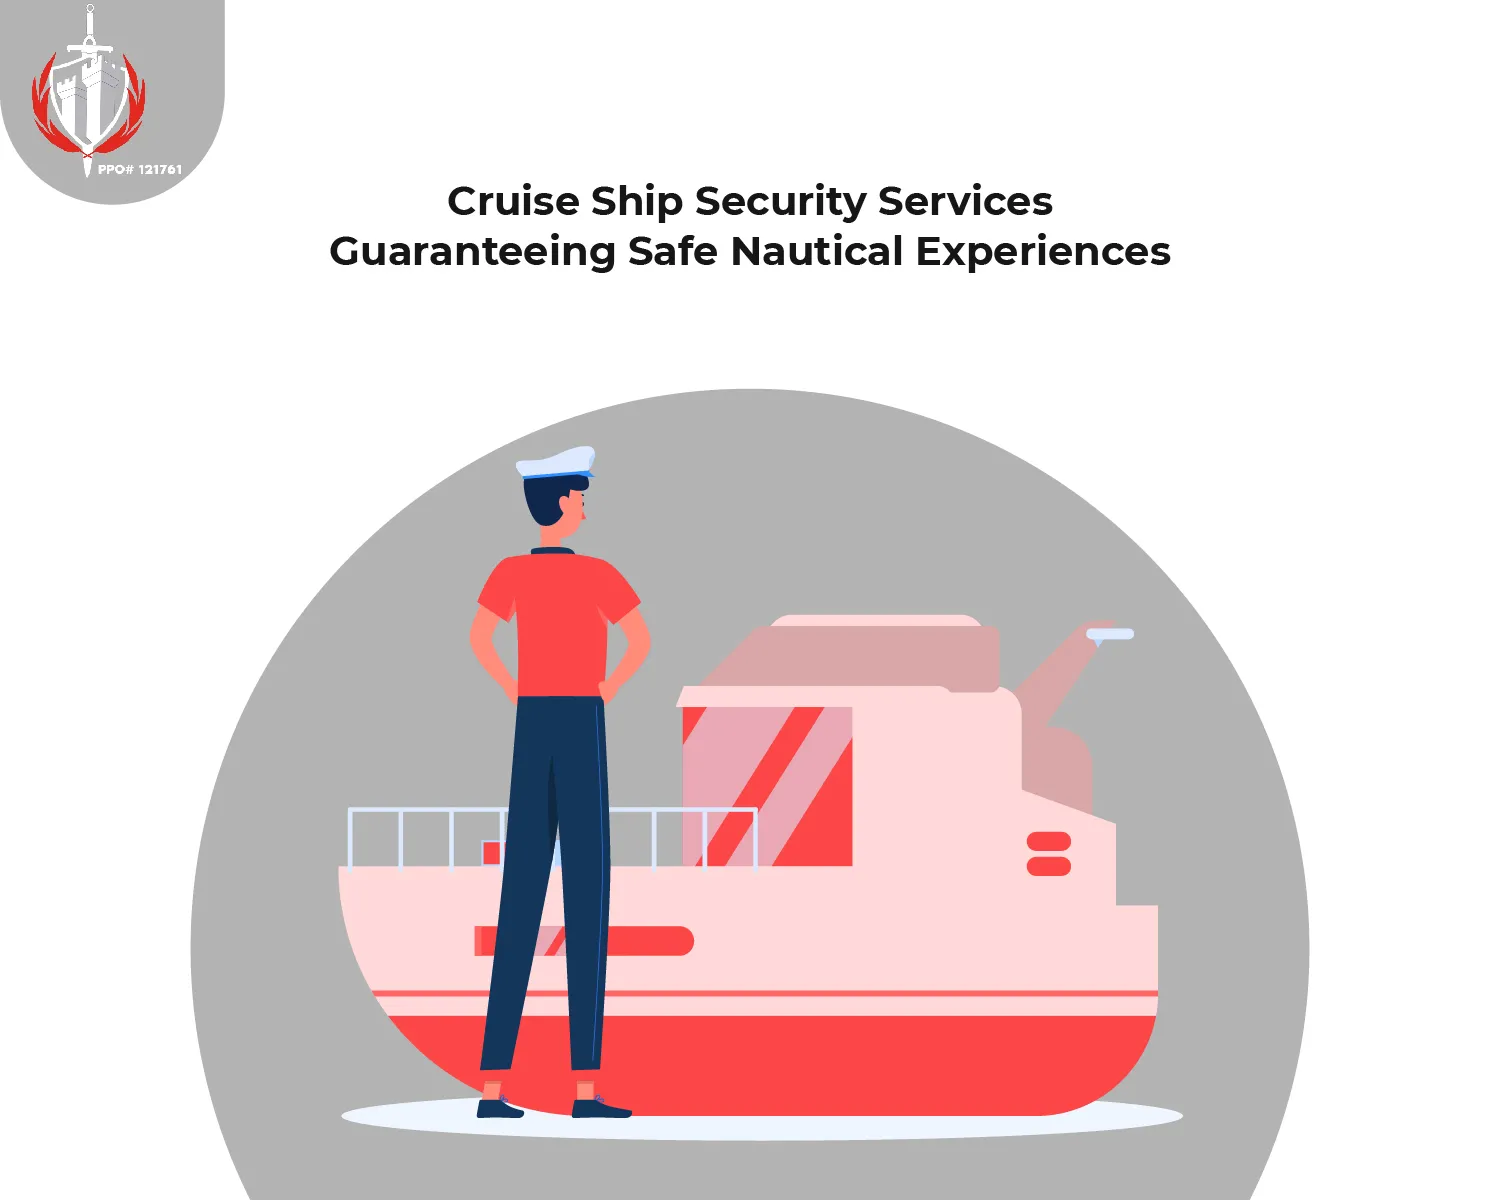 Cruise Ship Security Services: Guaranteeing Safe Nautical Experiences